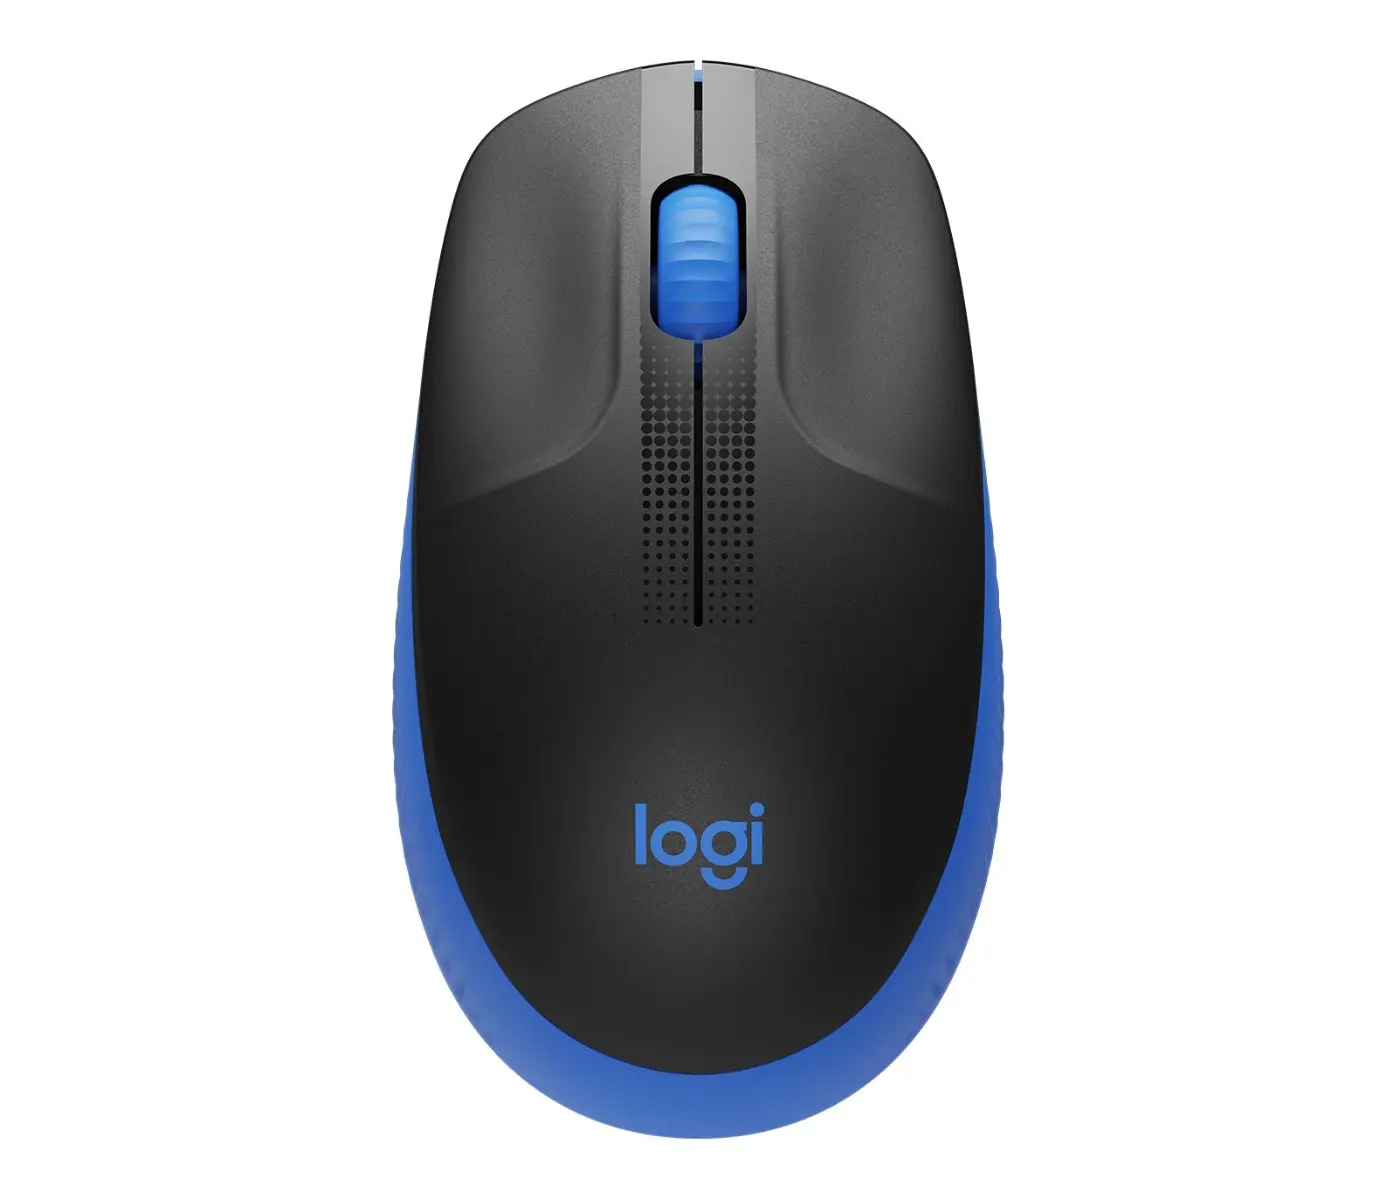 Mouse wireless Logitech M190, USB, Blue